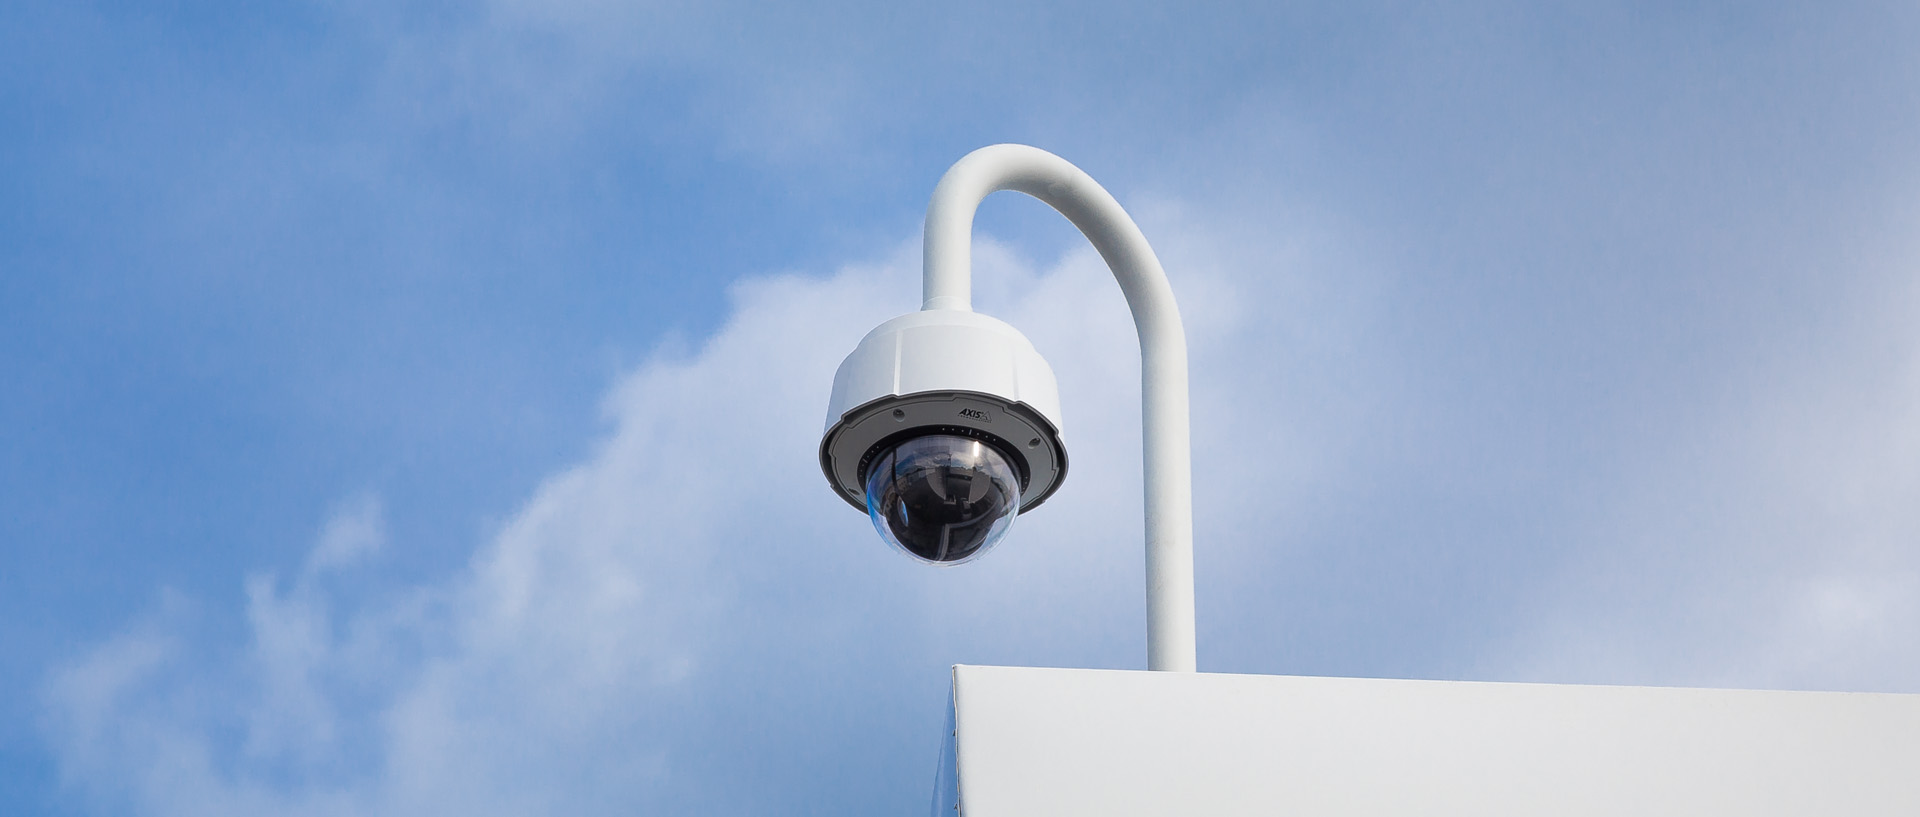 CCTV / Camera Systems